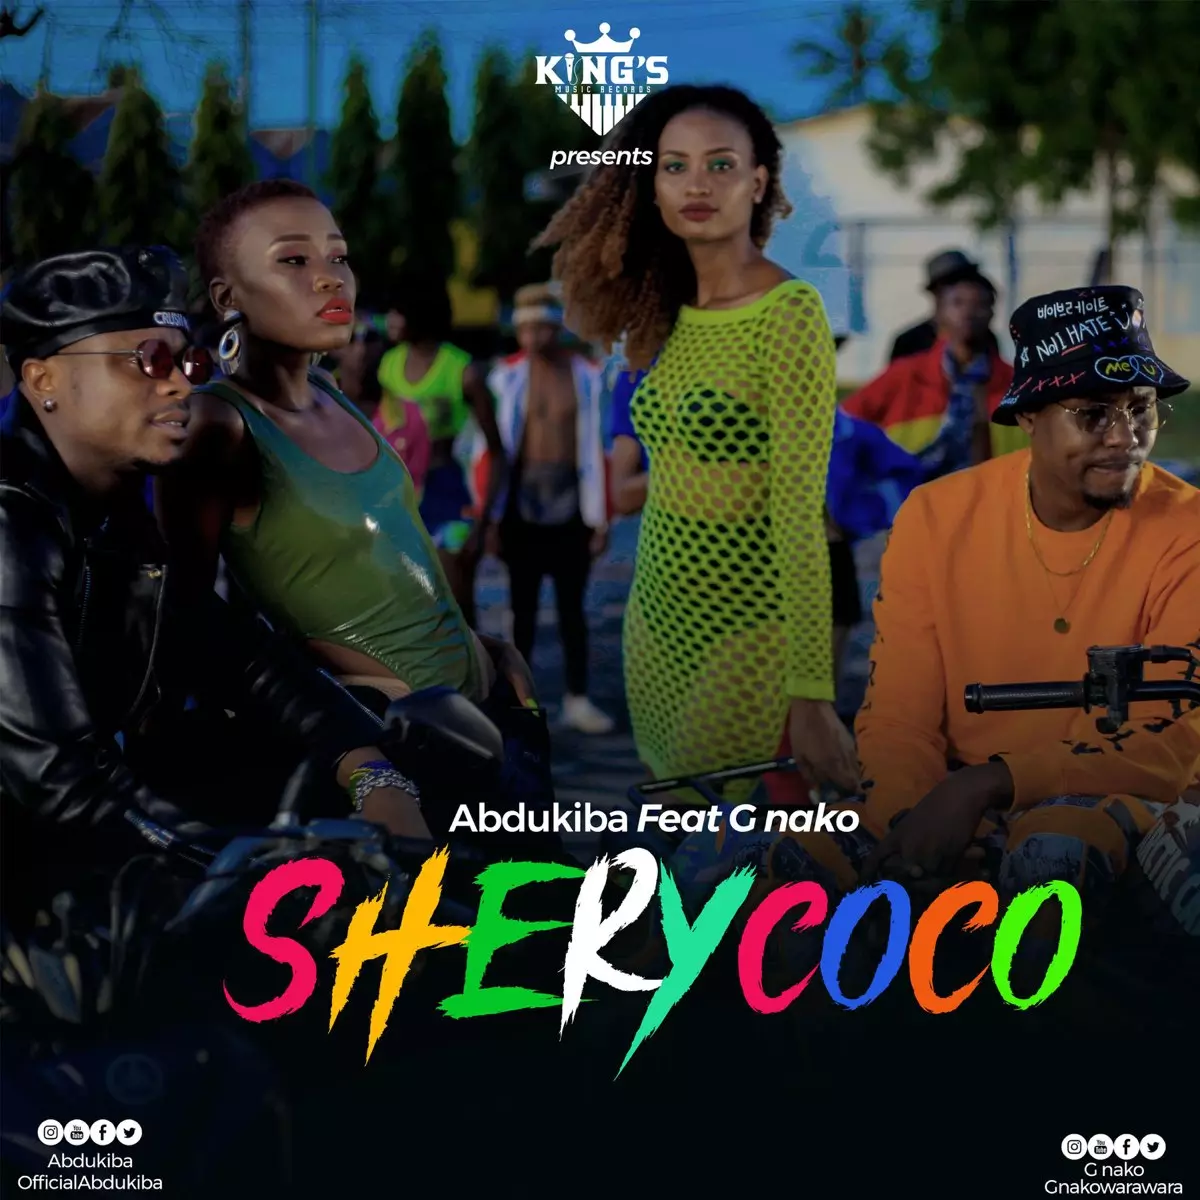 Shery Coco (feat. G Nako) - Single by AbduKiba on Apple Music